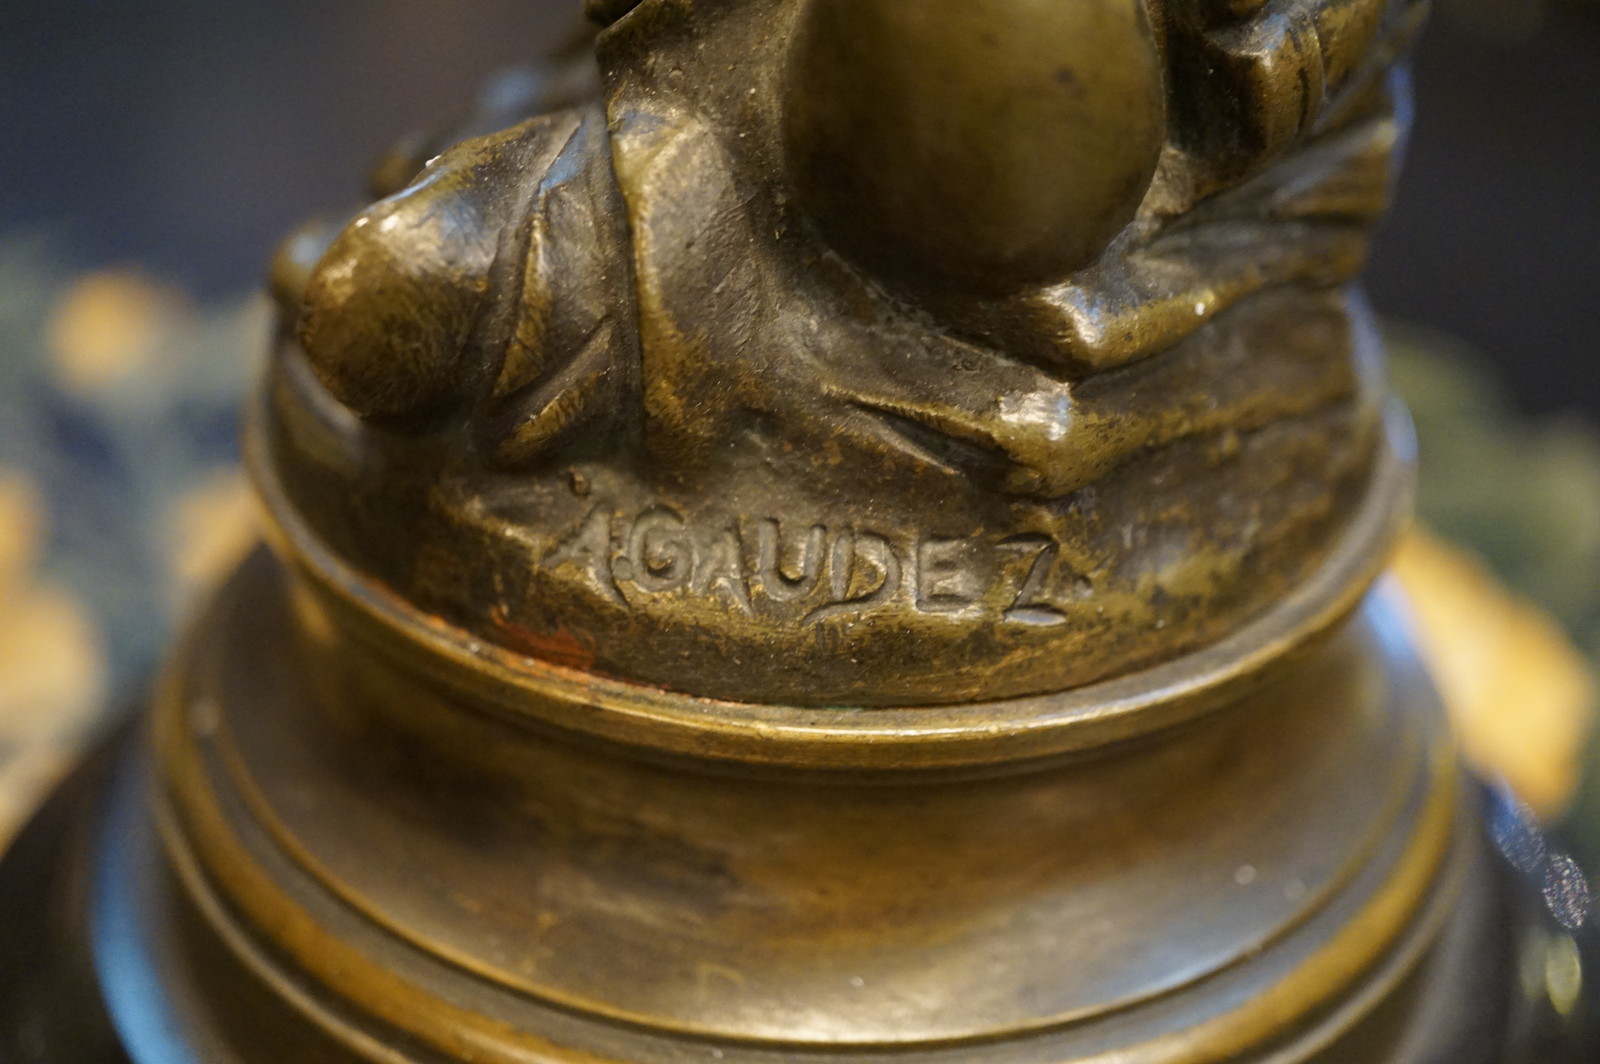 French bronze mysterieuze signed A. Gaudez